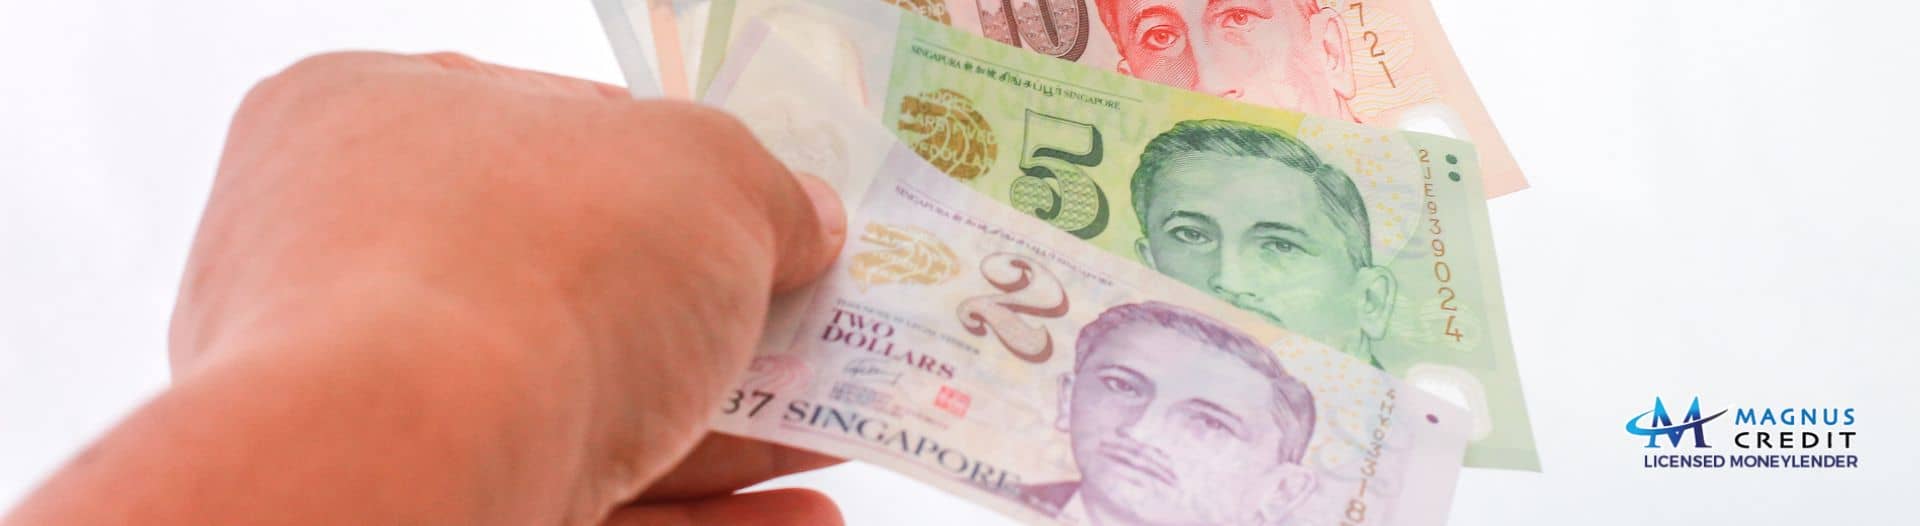 licensed money lender singapore or personally lend money